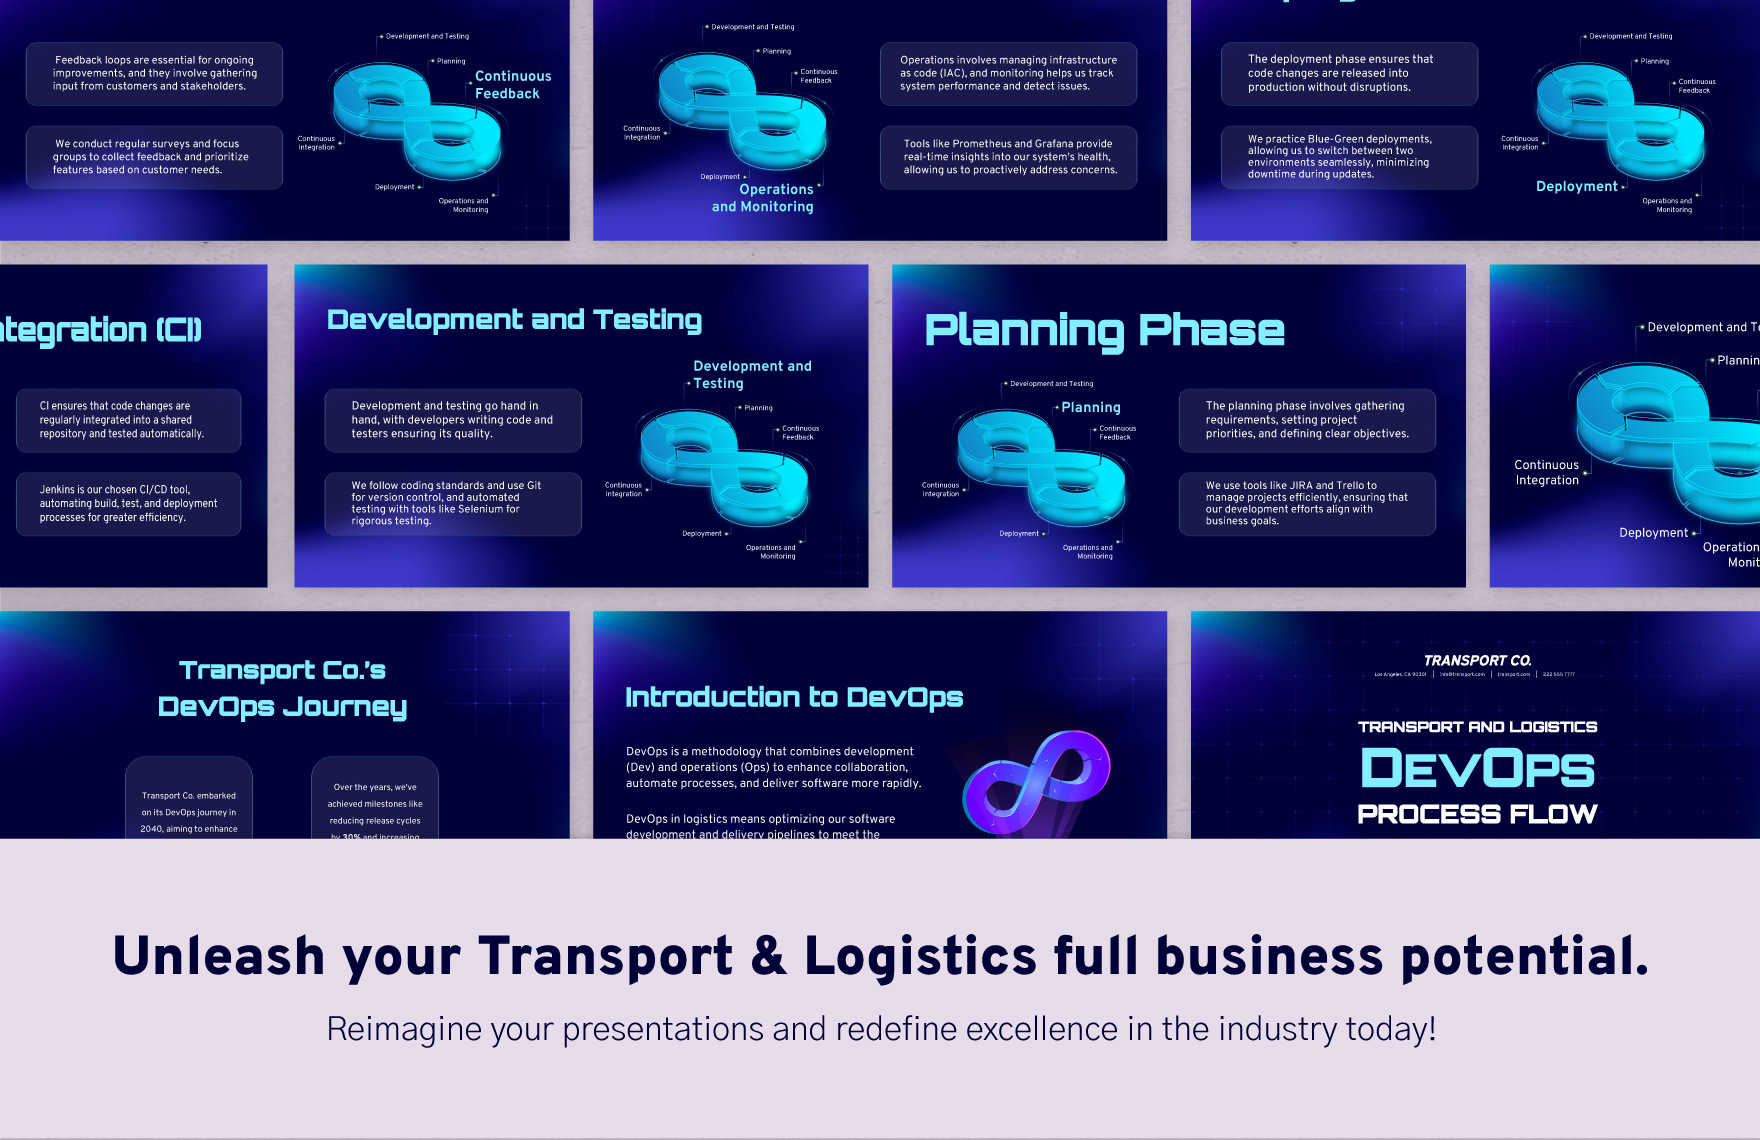 Transport and Logistics DevOps Process Flow Template